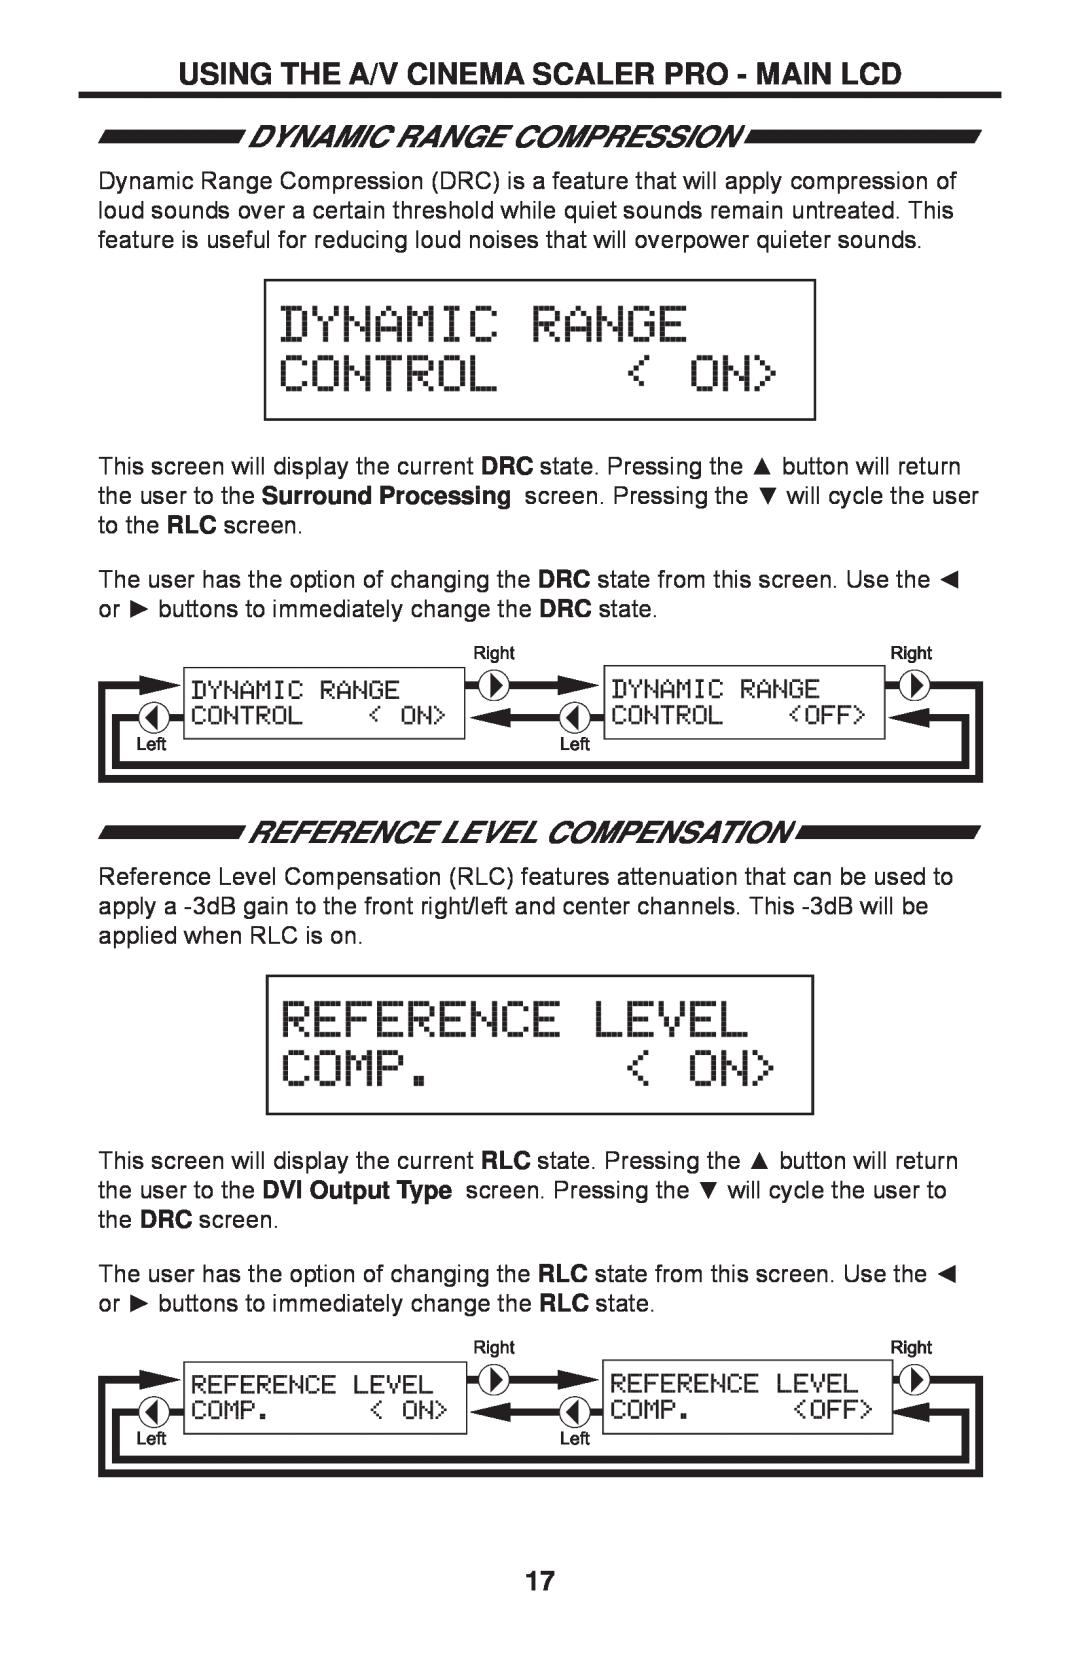 Gefen PRO I user manual Dynamic Range Compression, Reference Level Compensation, Using The A/V Cinema Scaler Pro - Main Lcd 